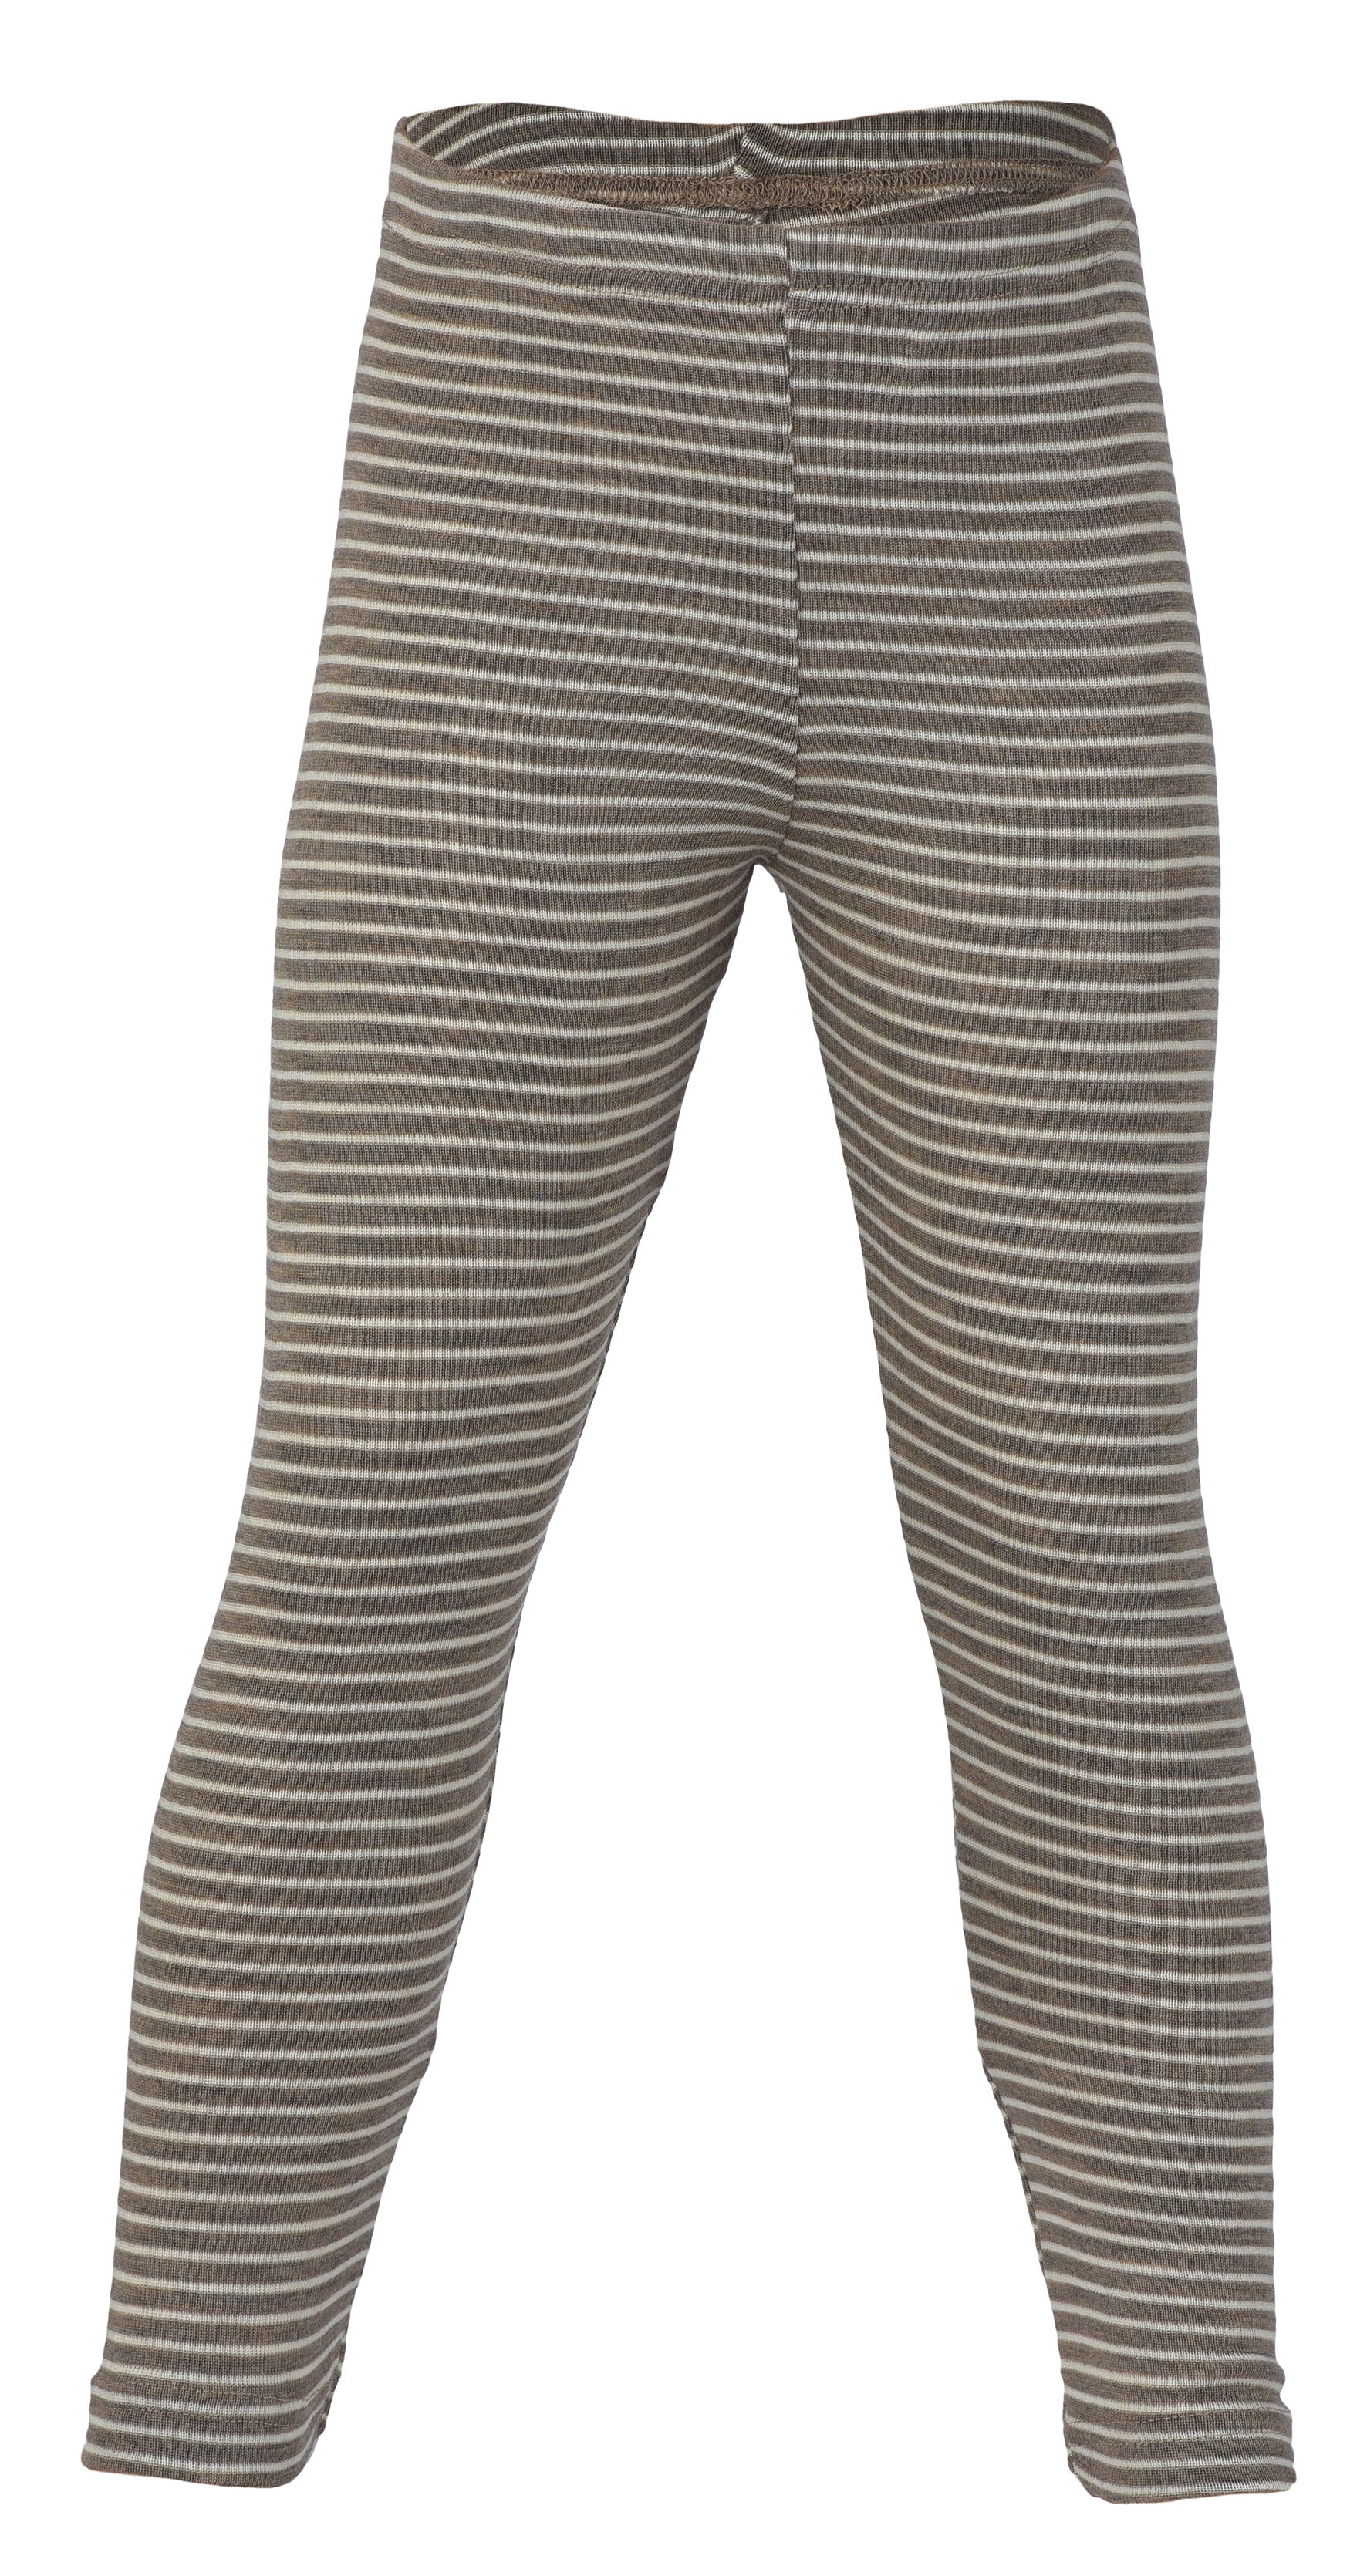 ENGEL Men's Thermal Underwear Long Johns Leggings, Organic Merino Wool Silk